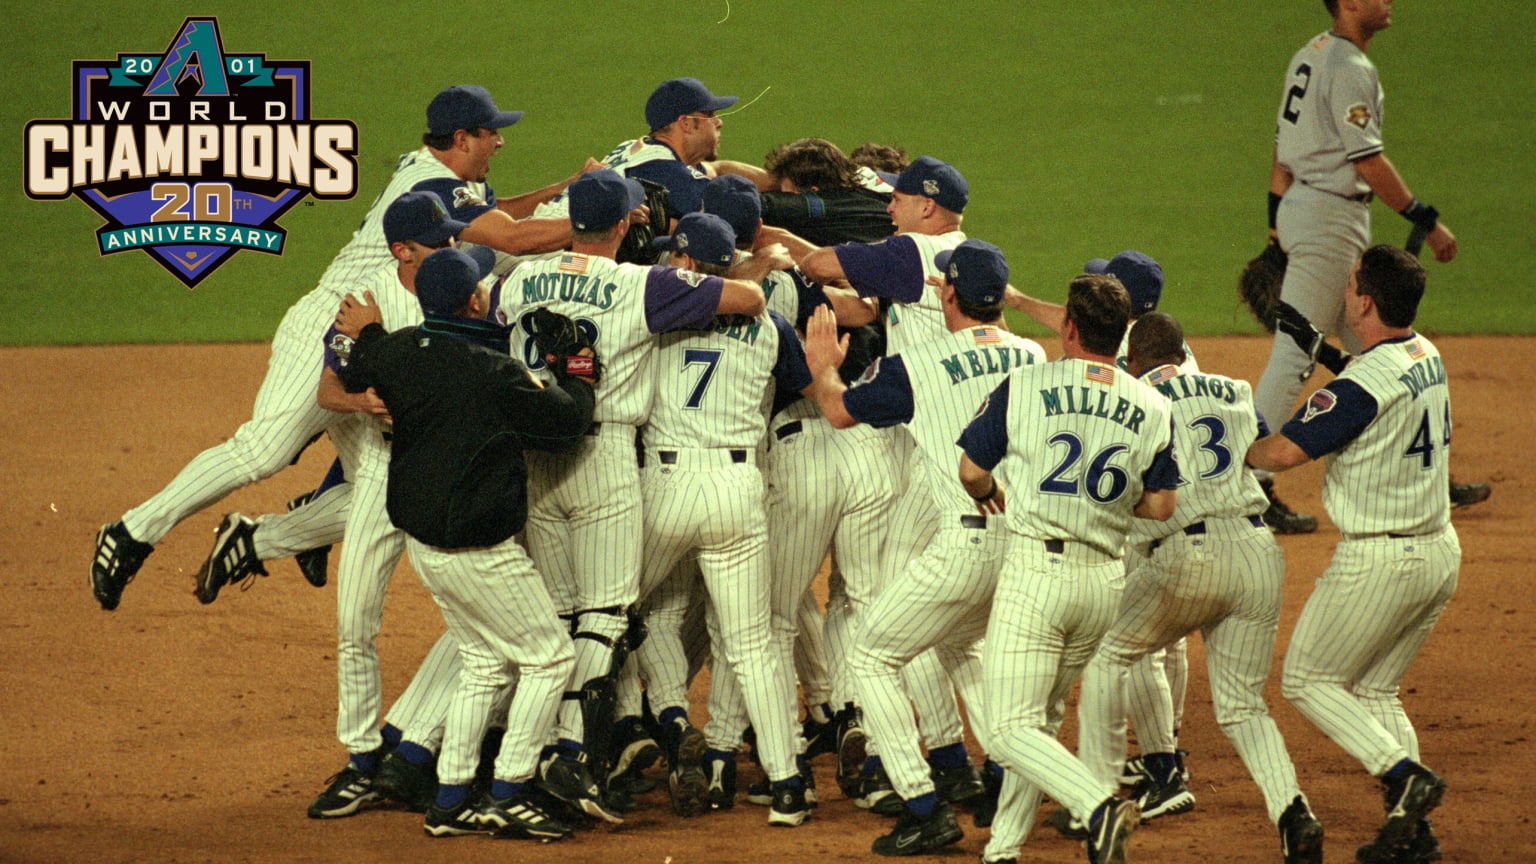 Diamondbacks celebrating 20th Anniversary of 2001 World Series